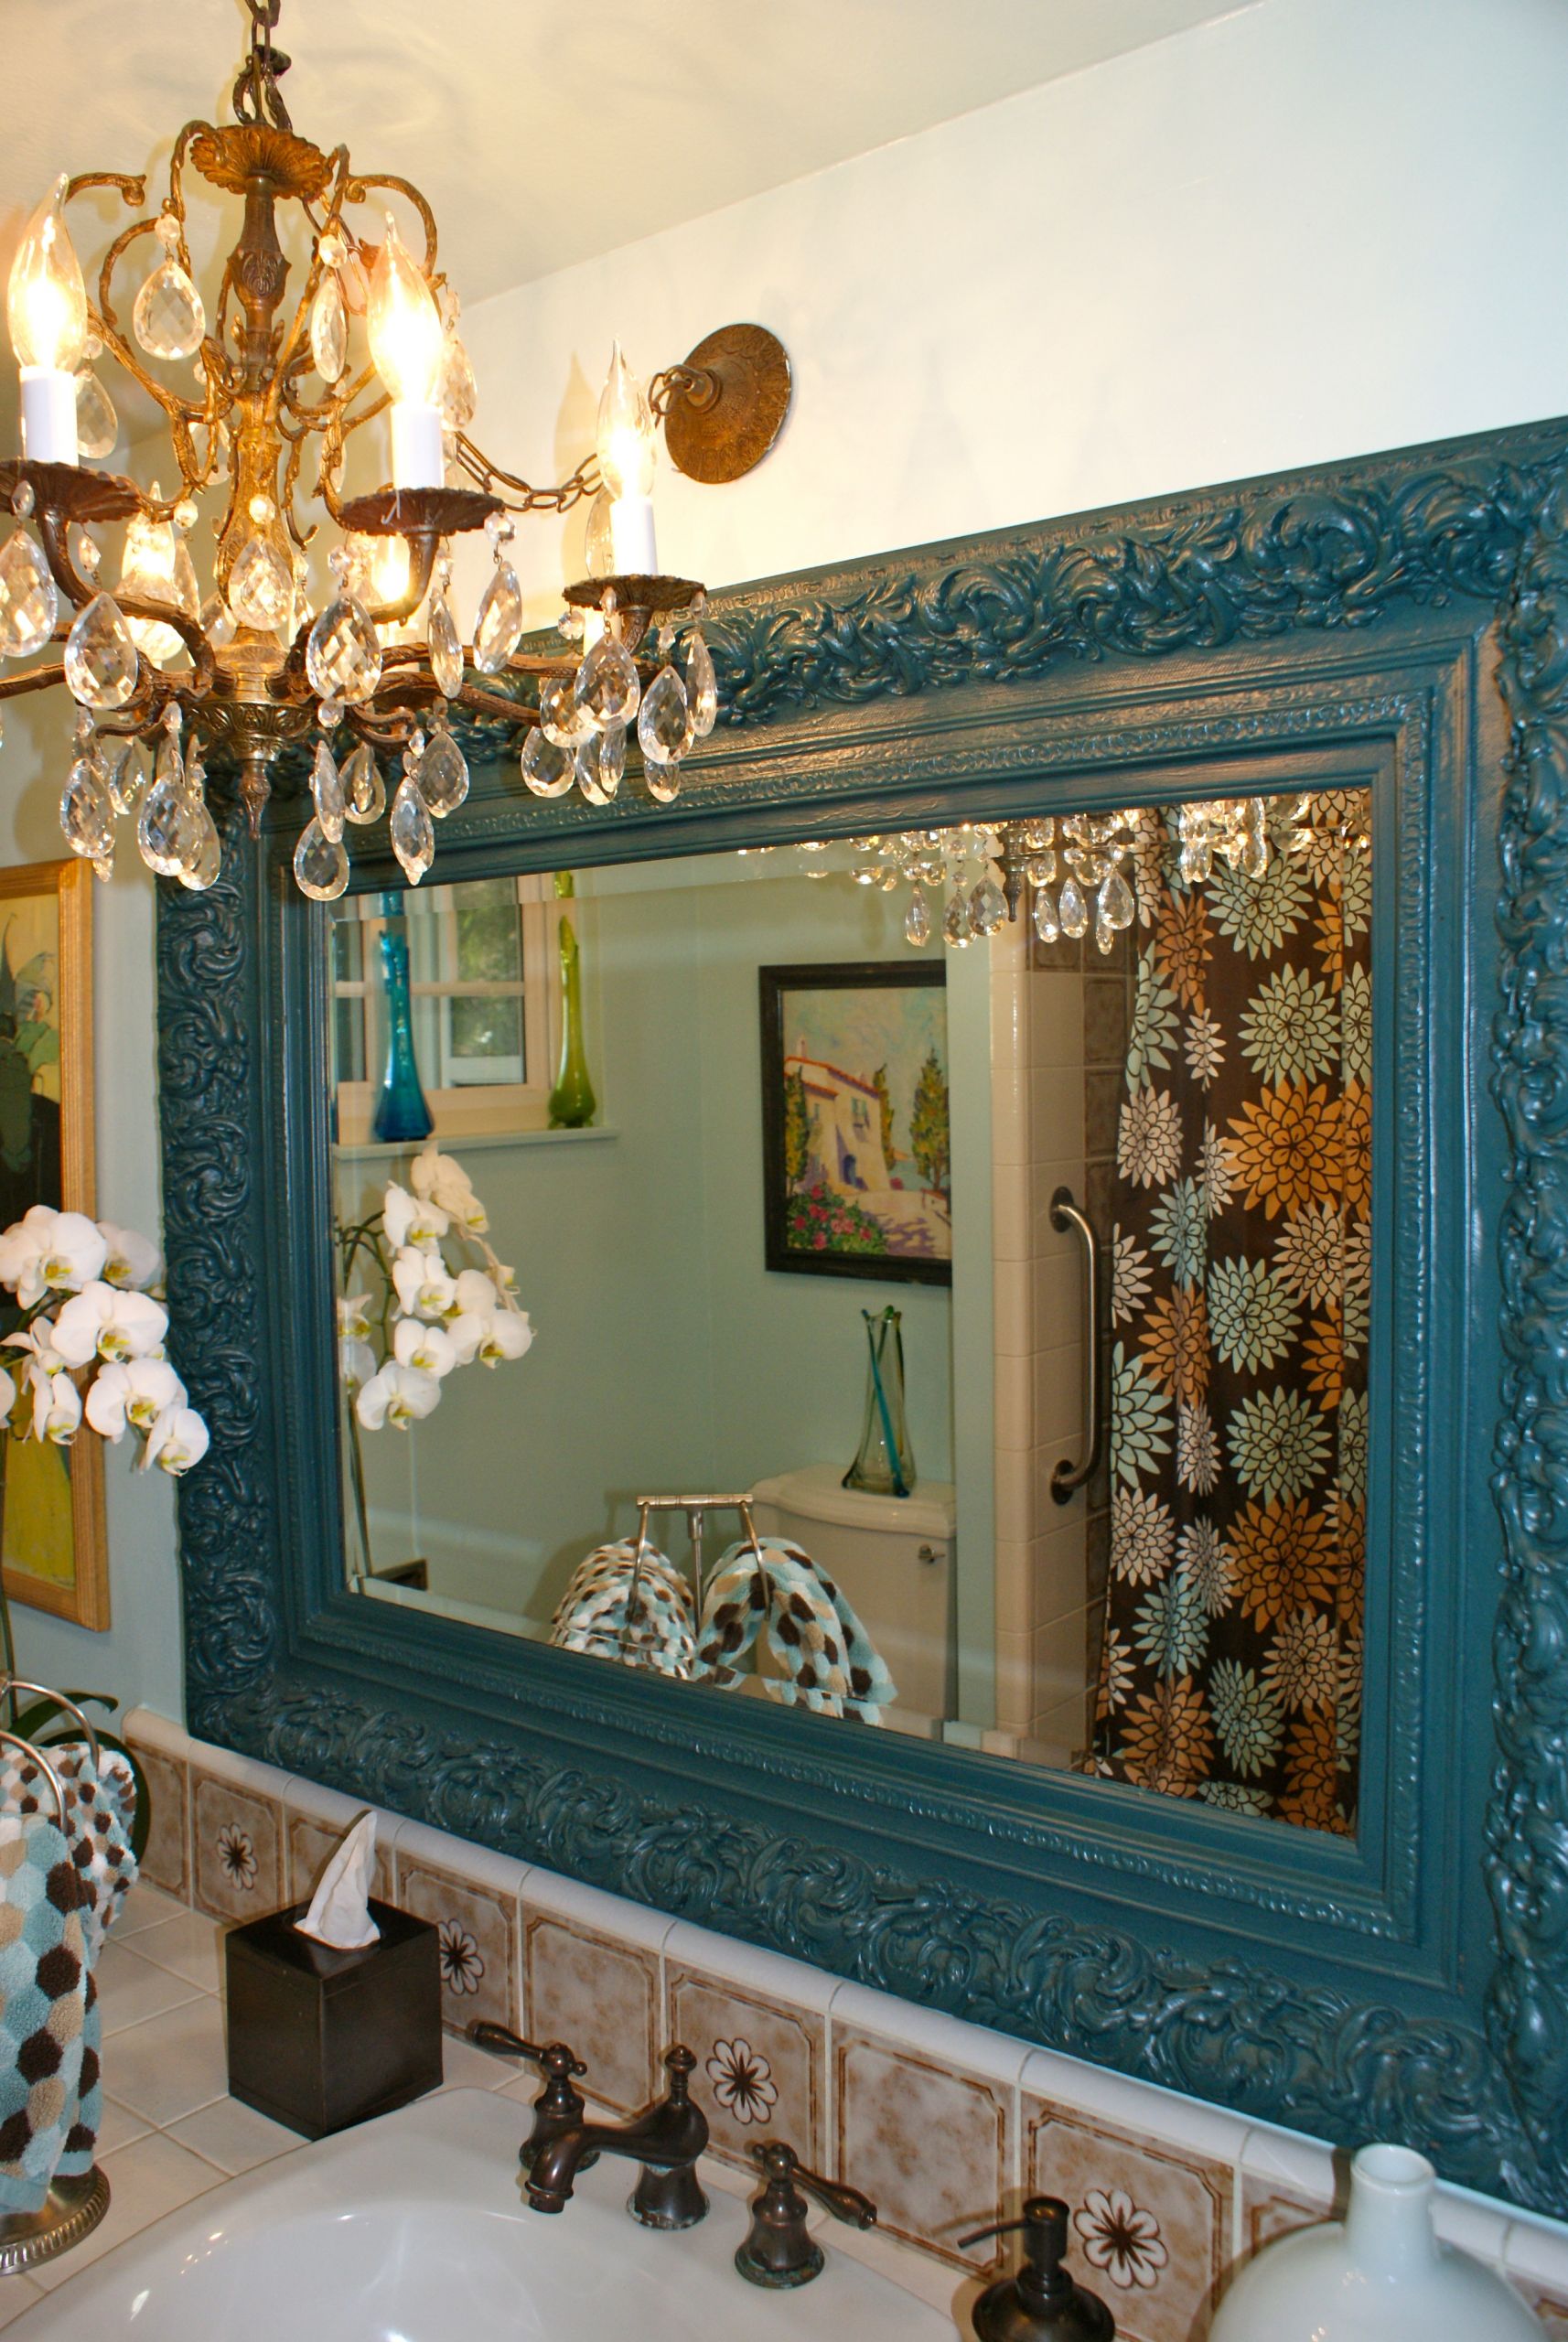 Gold Frame Bathroom Mirror
 update that old gold mirror…